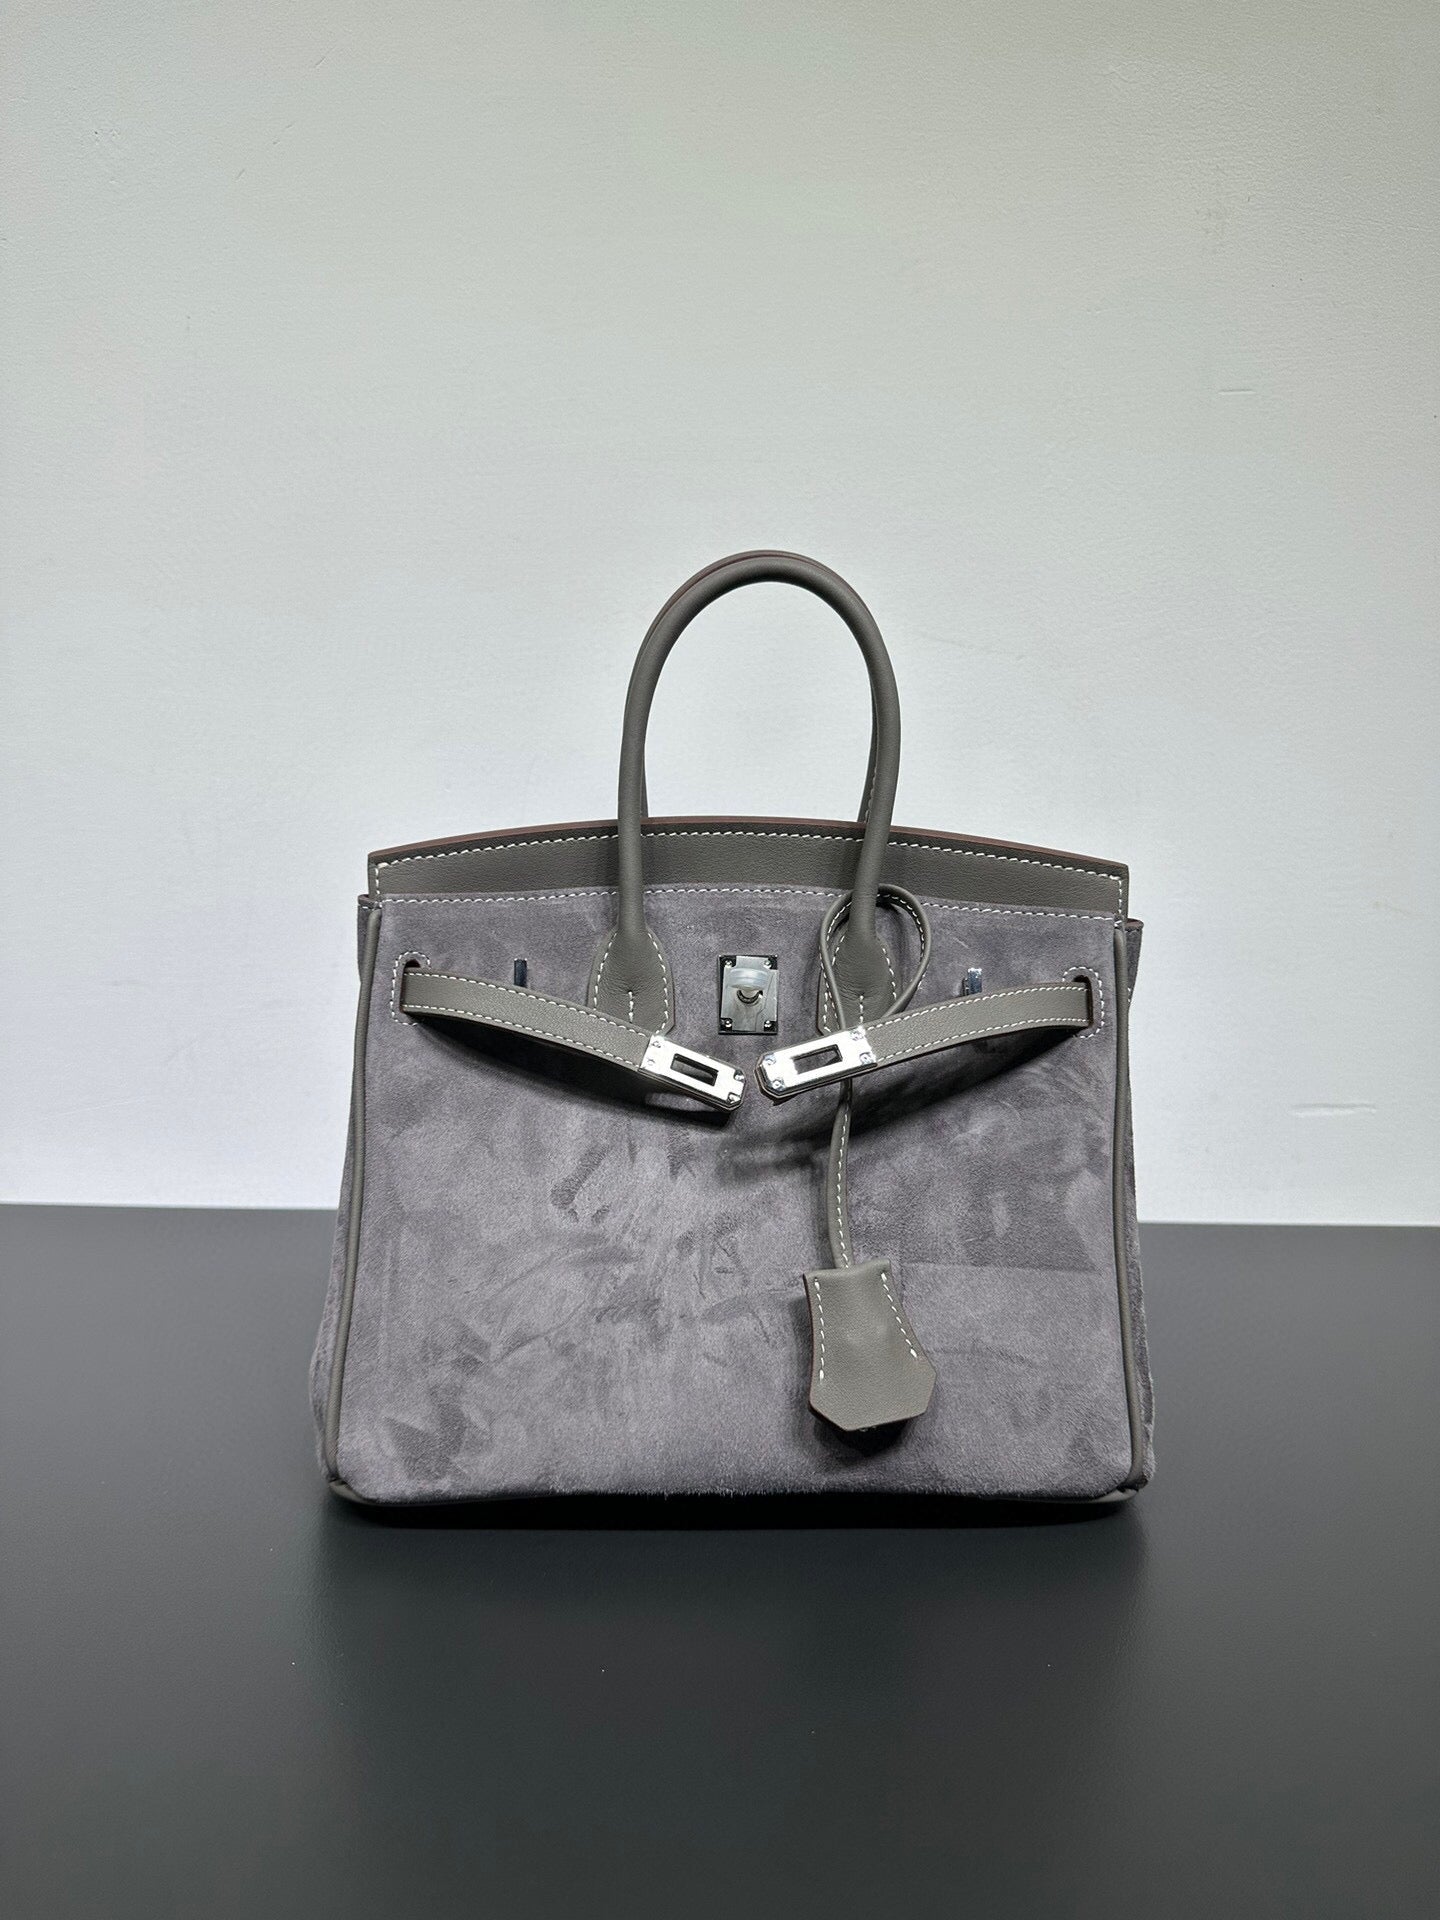 Womens Suede Leather Padlock Top Handle Bag Grey